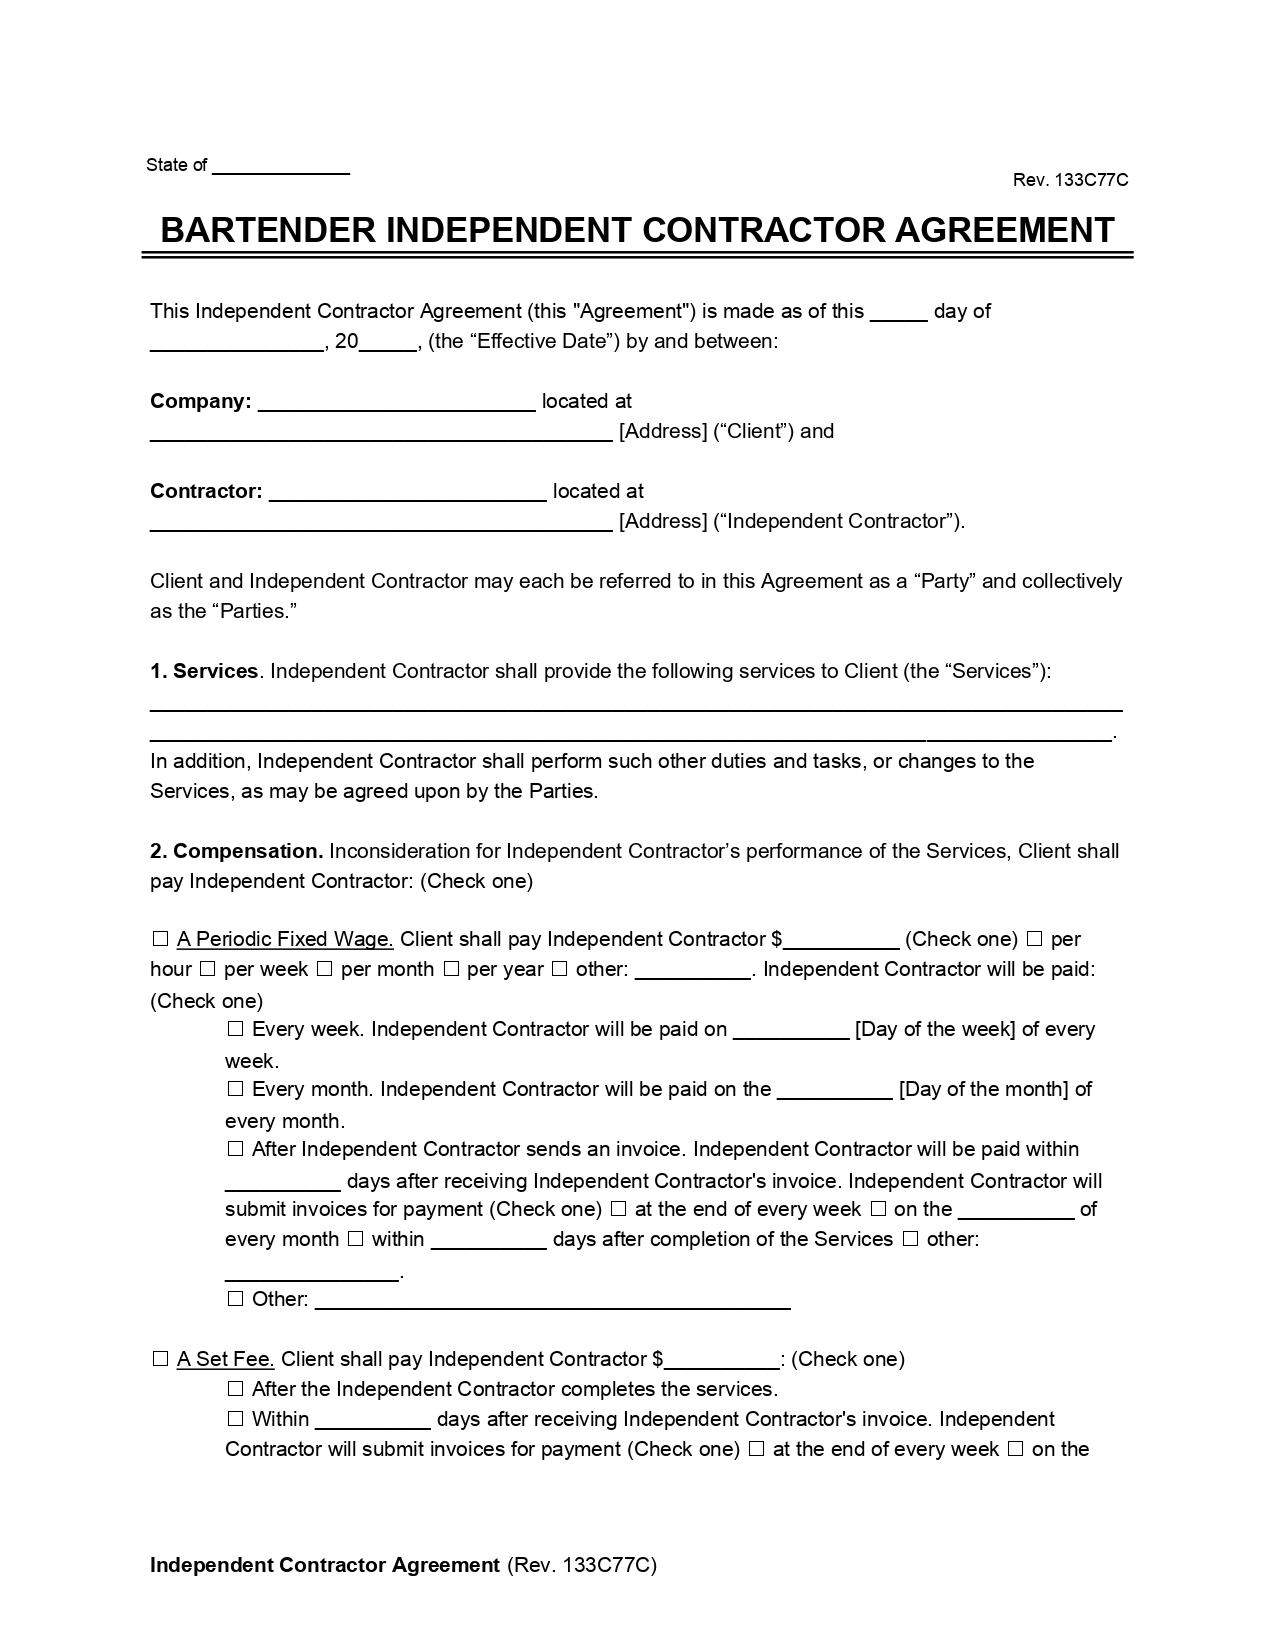 Bartender Independent Contractor Agreement